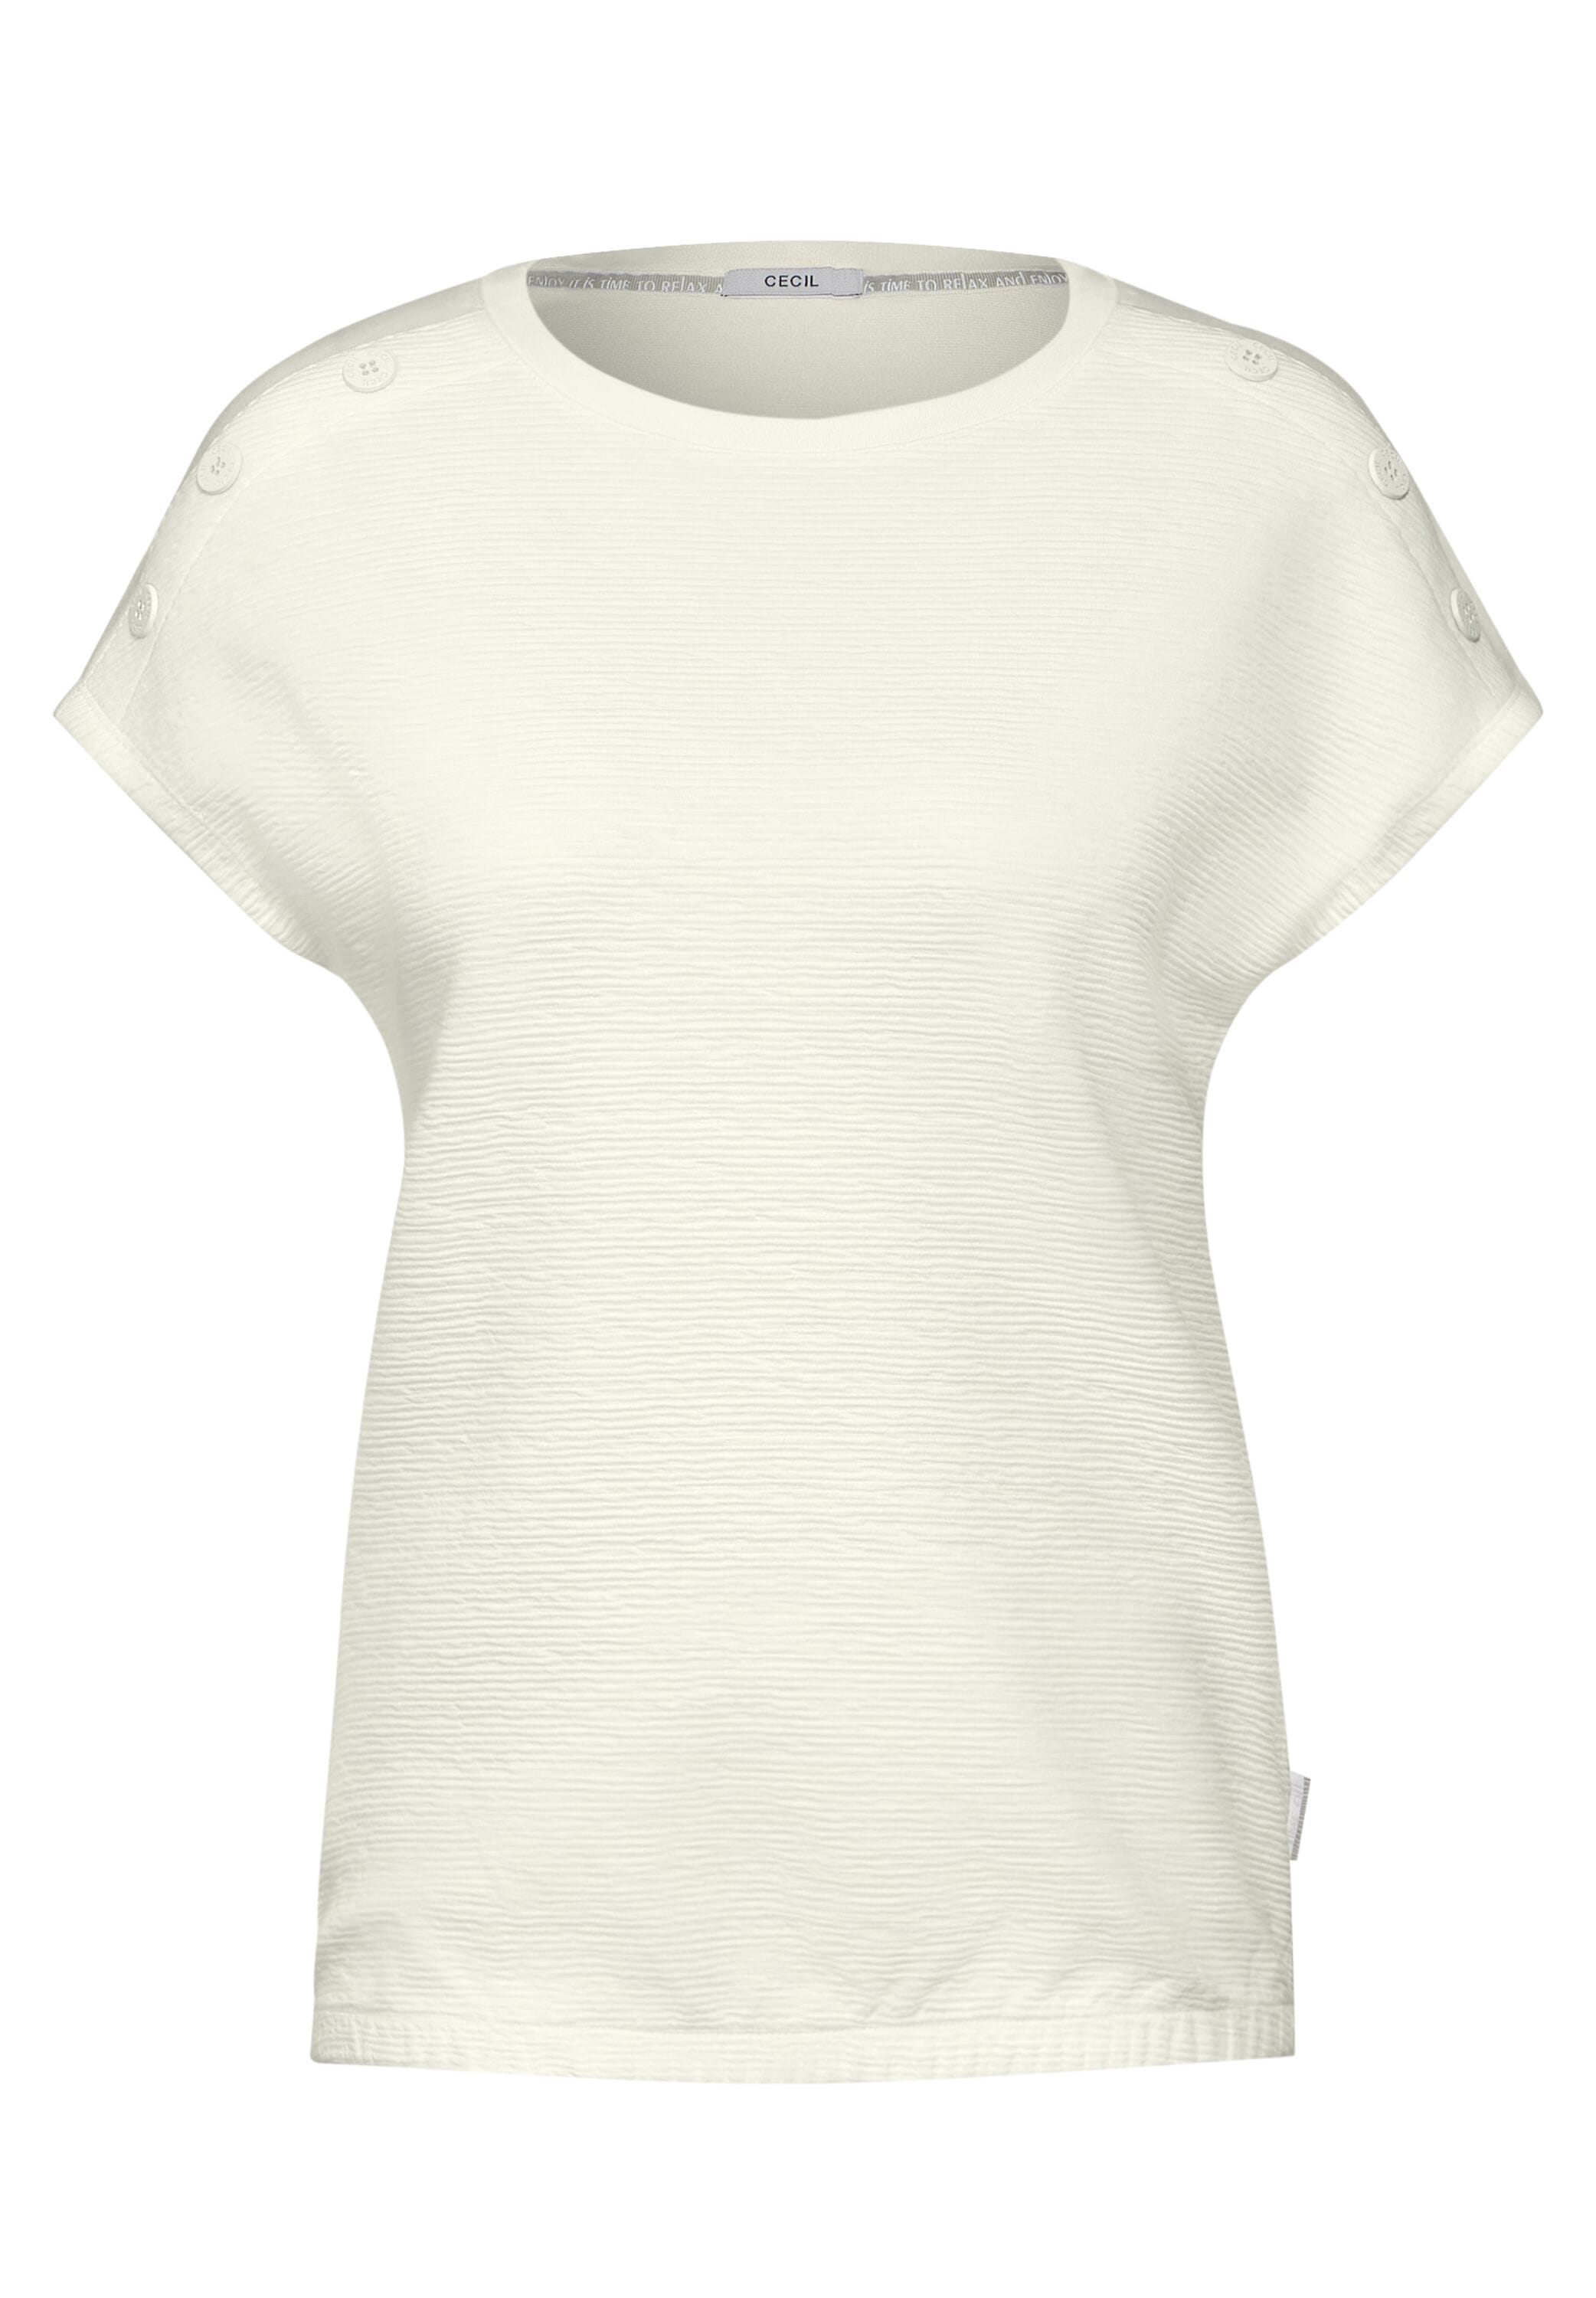 Cecil T-Shirt, mit elegantem Knopfdetail an der Schulter